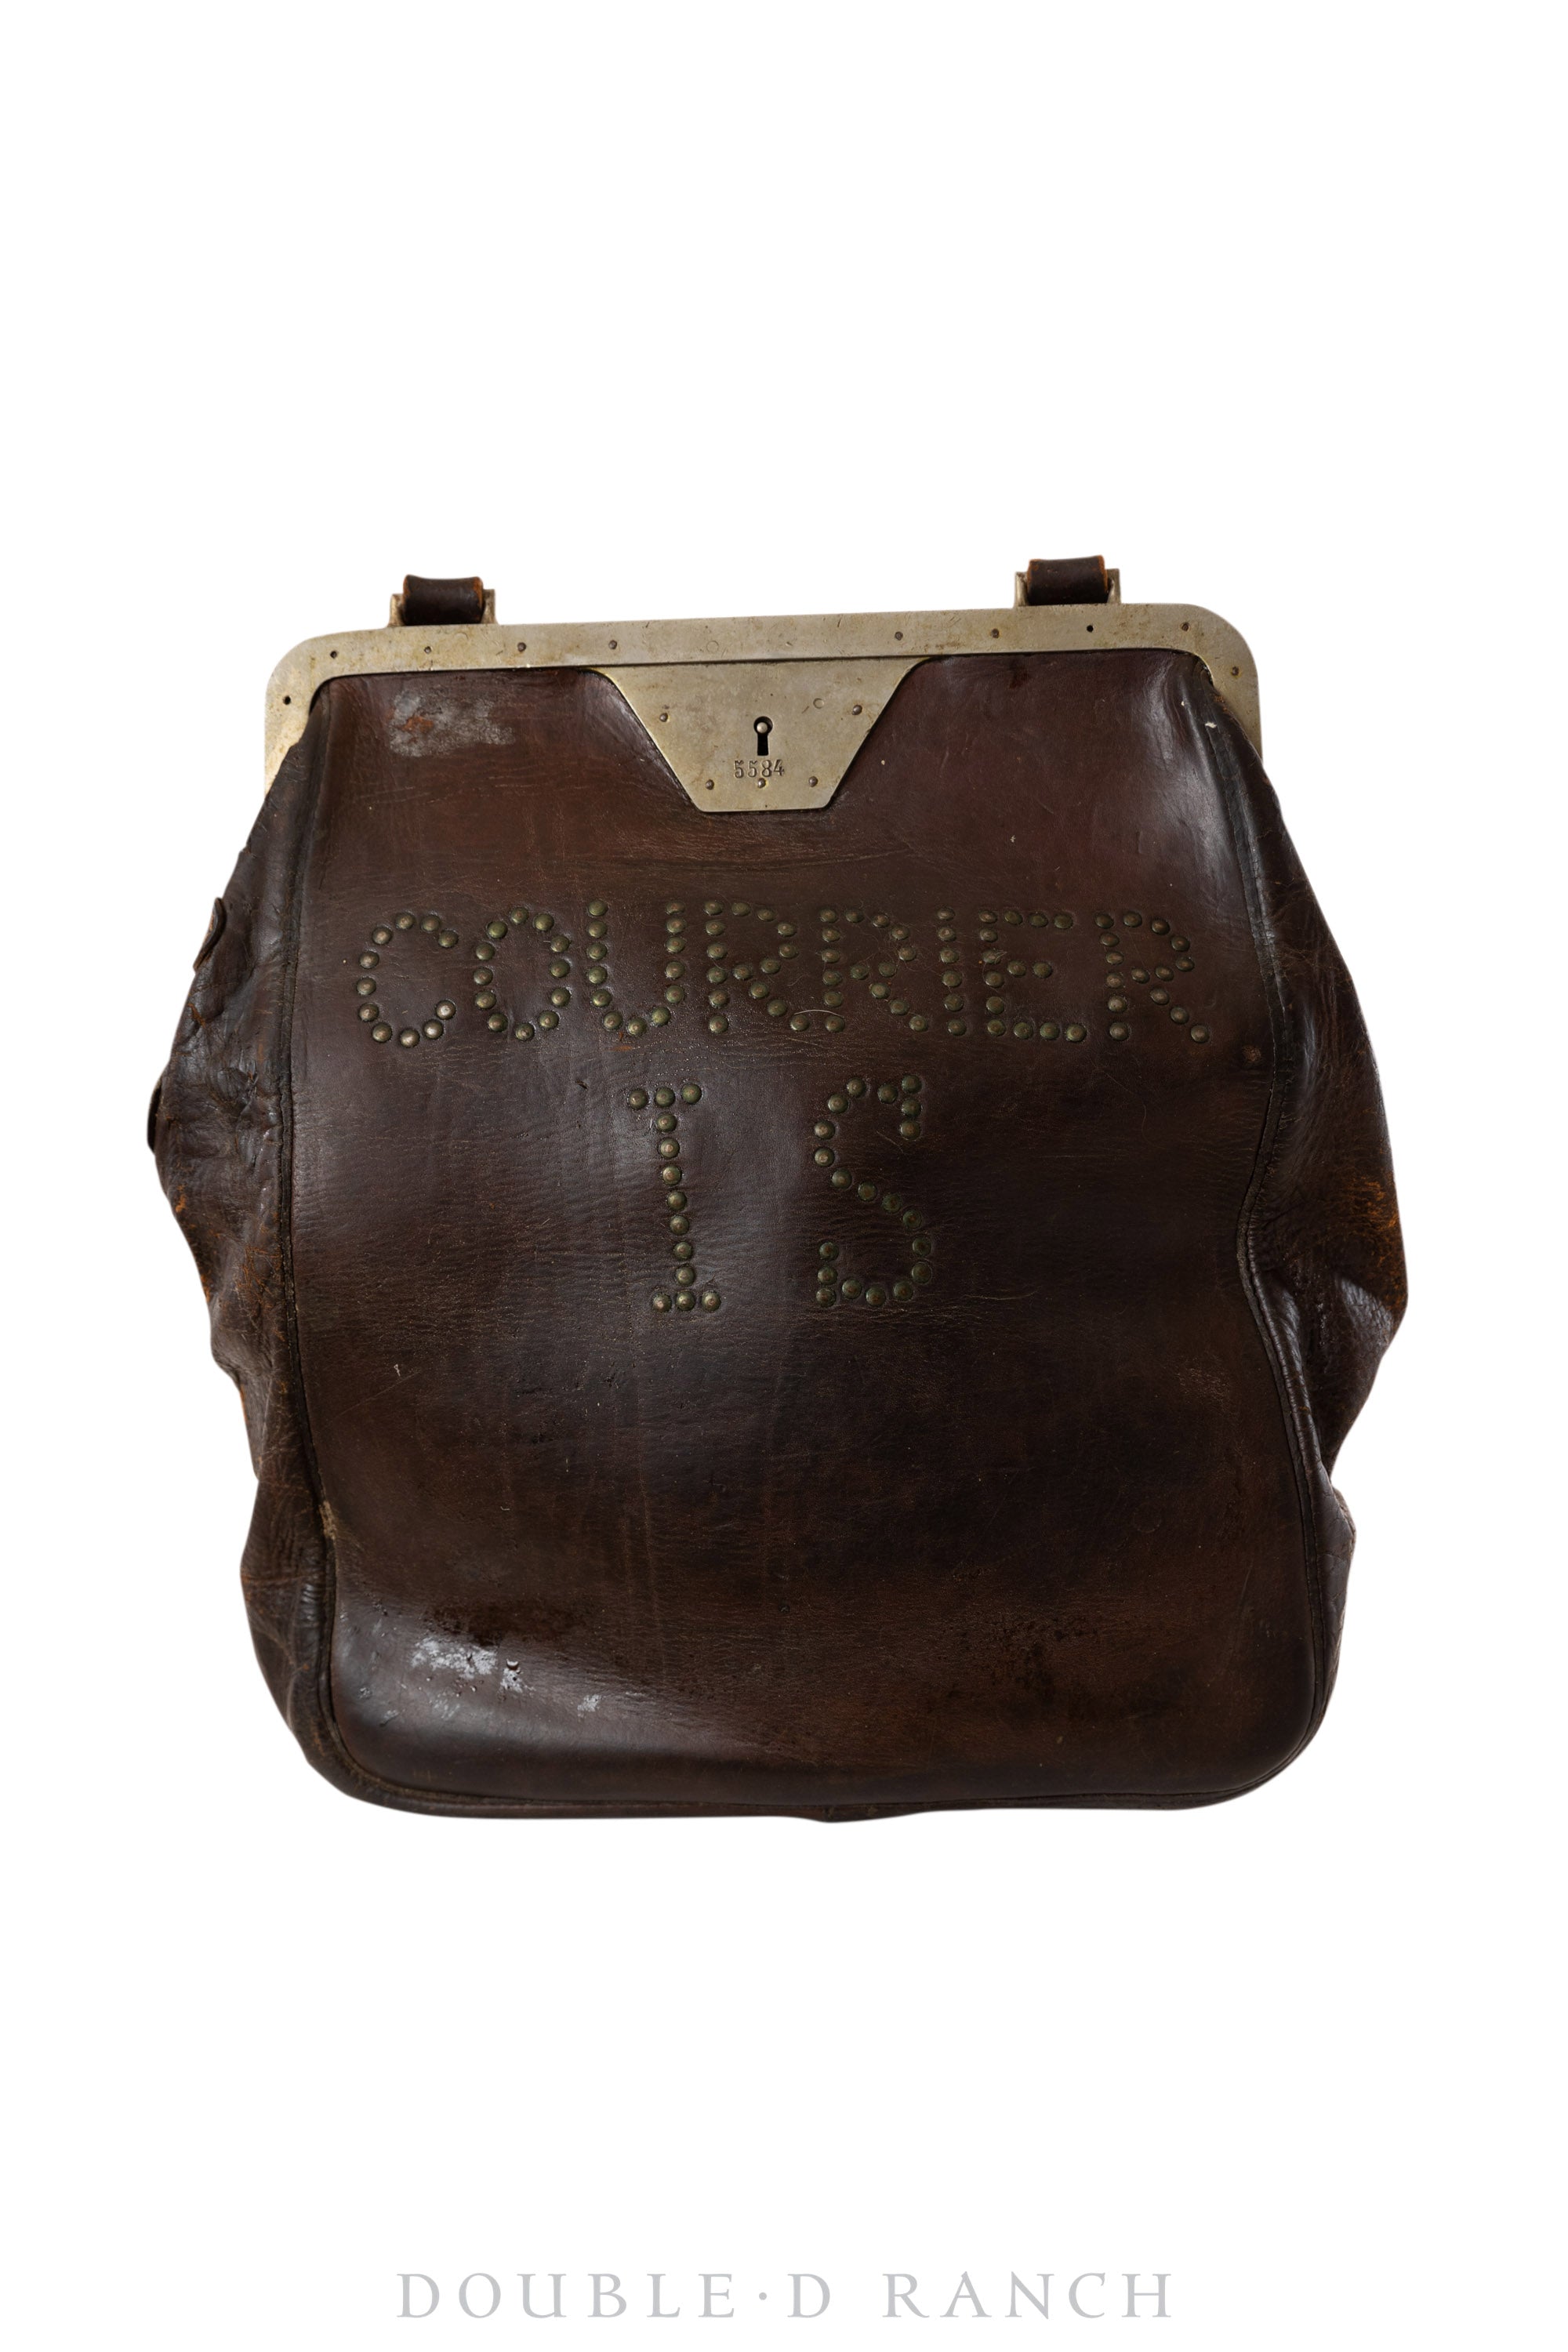 Antique Leather Bag